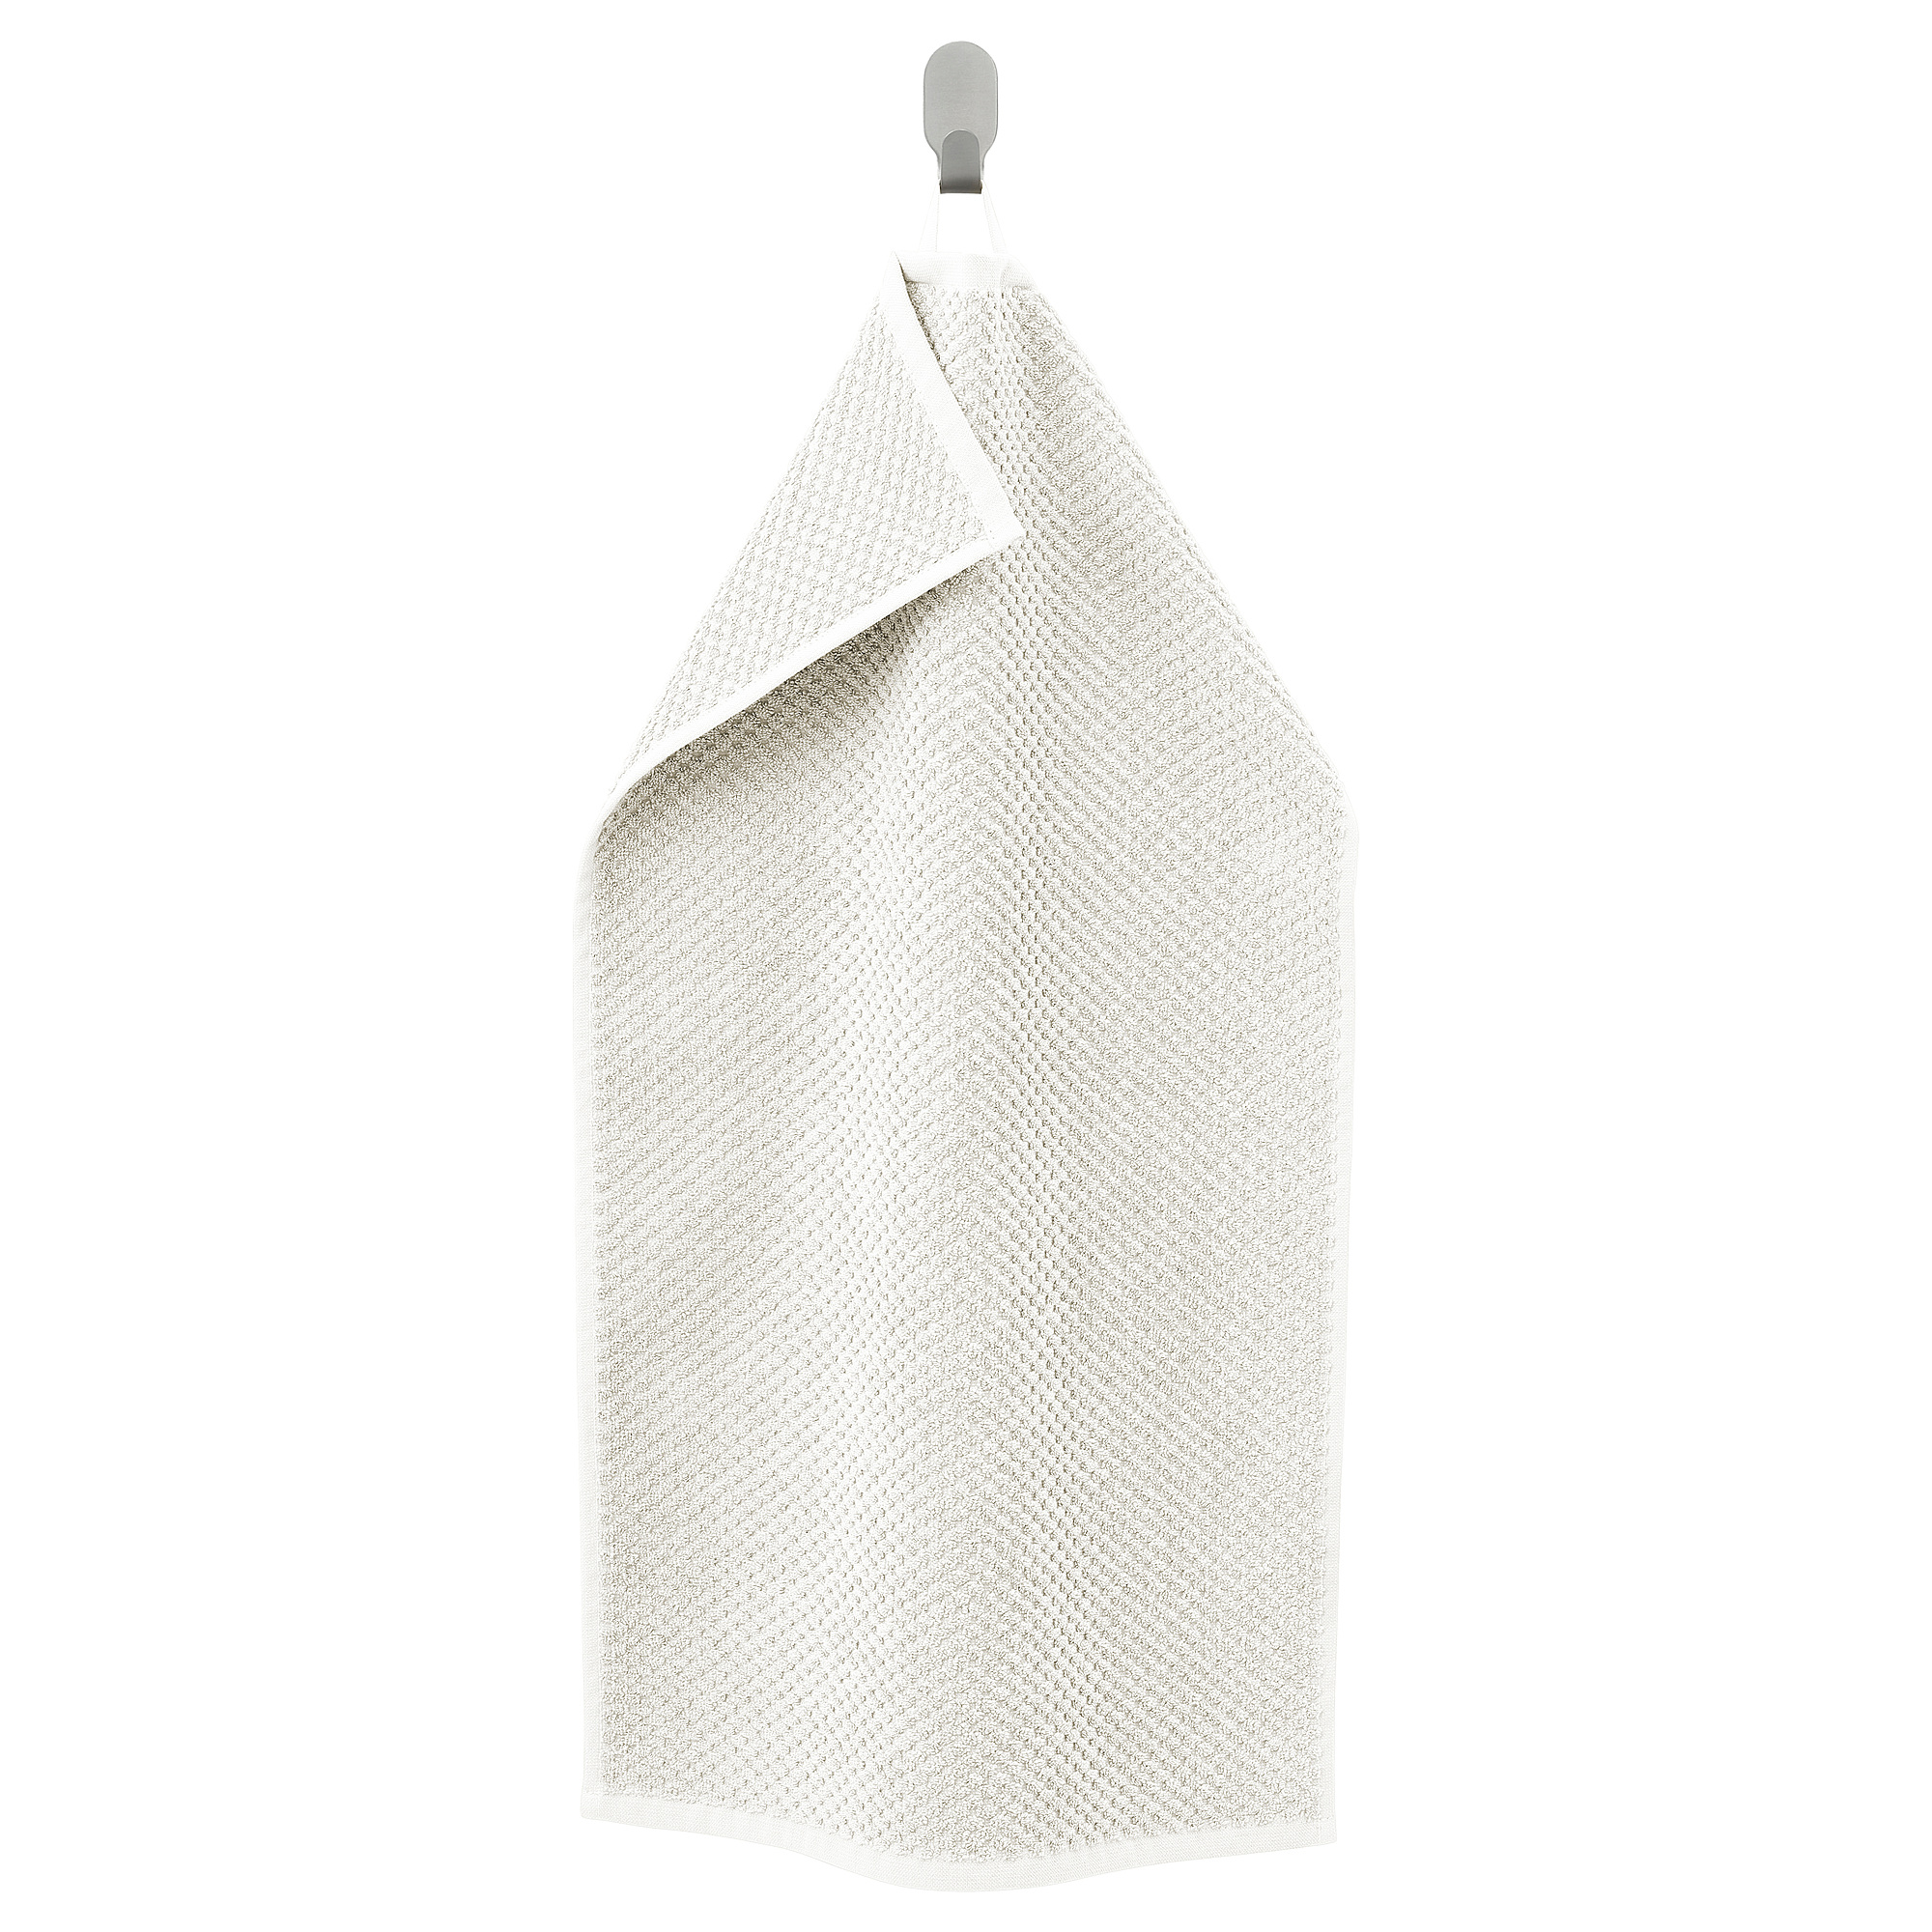 GULVIAL hand towel